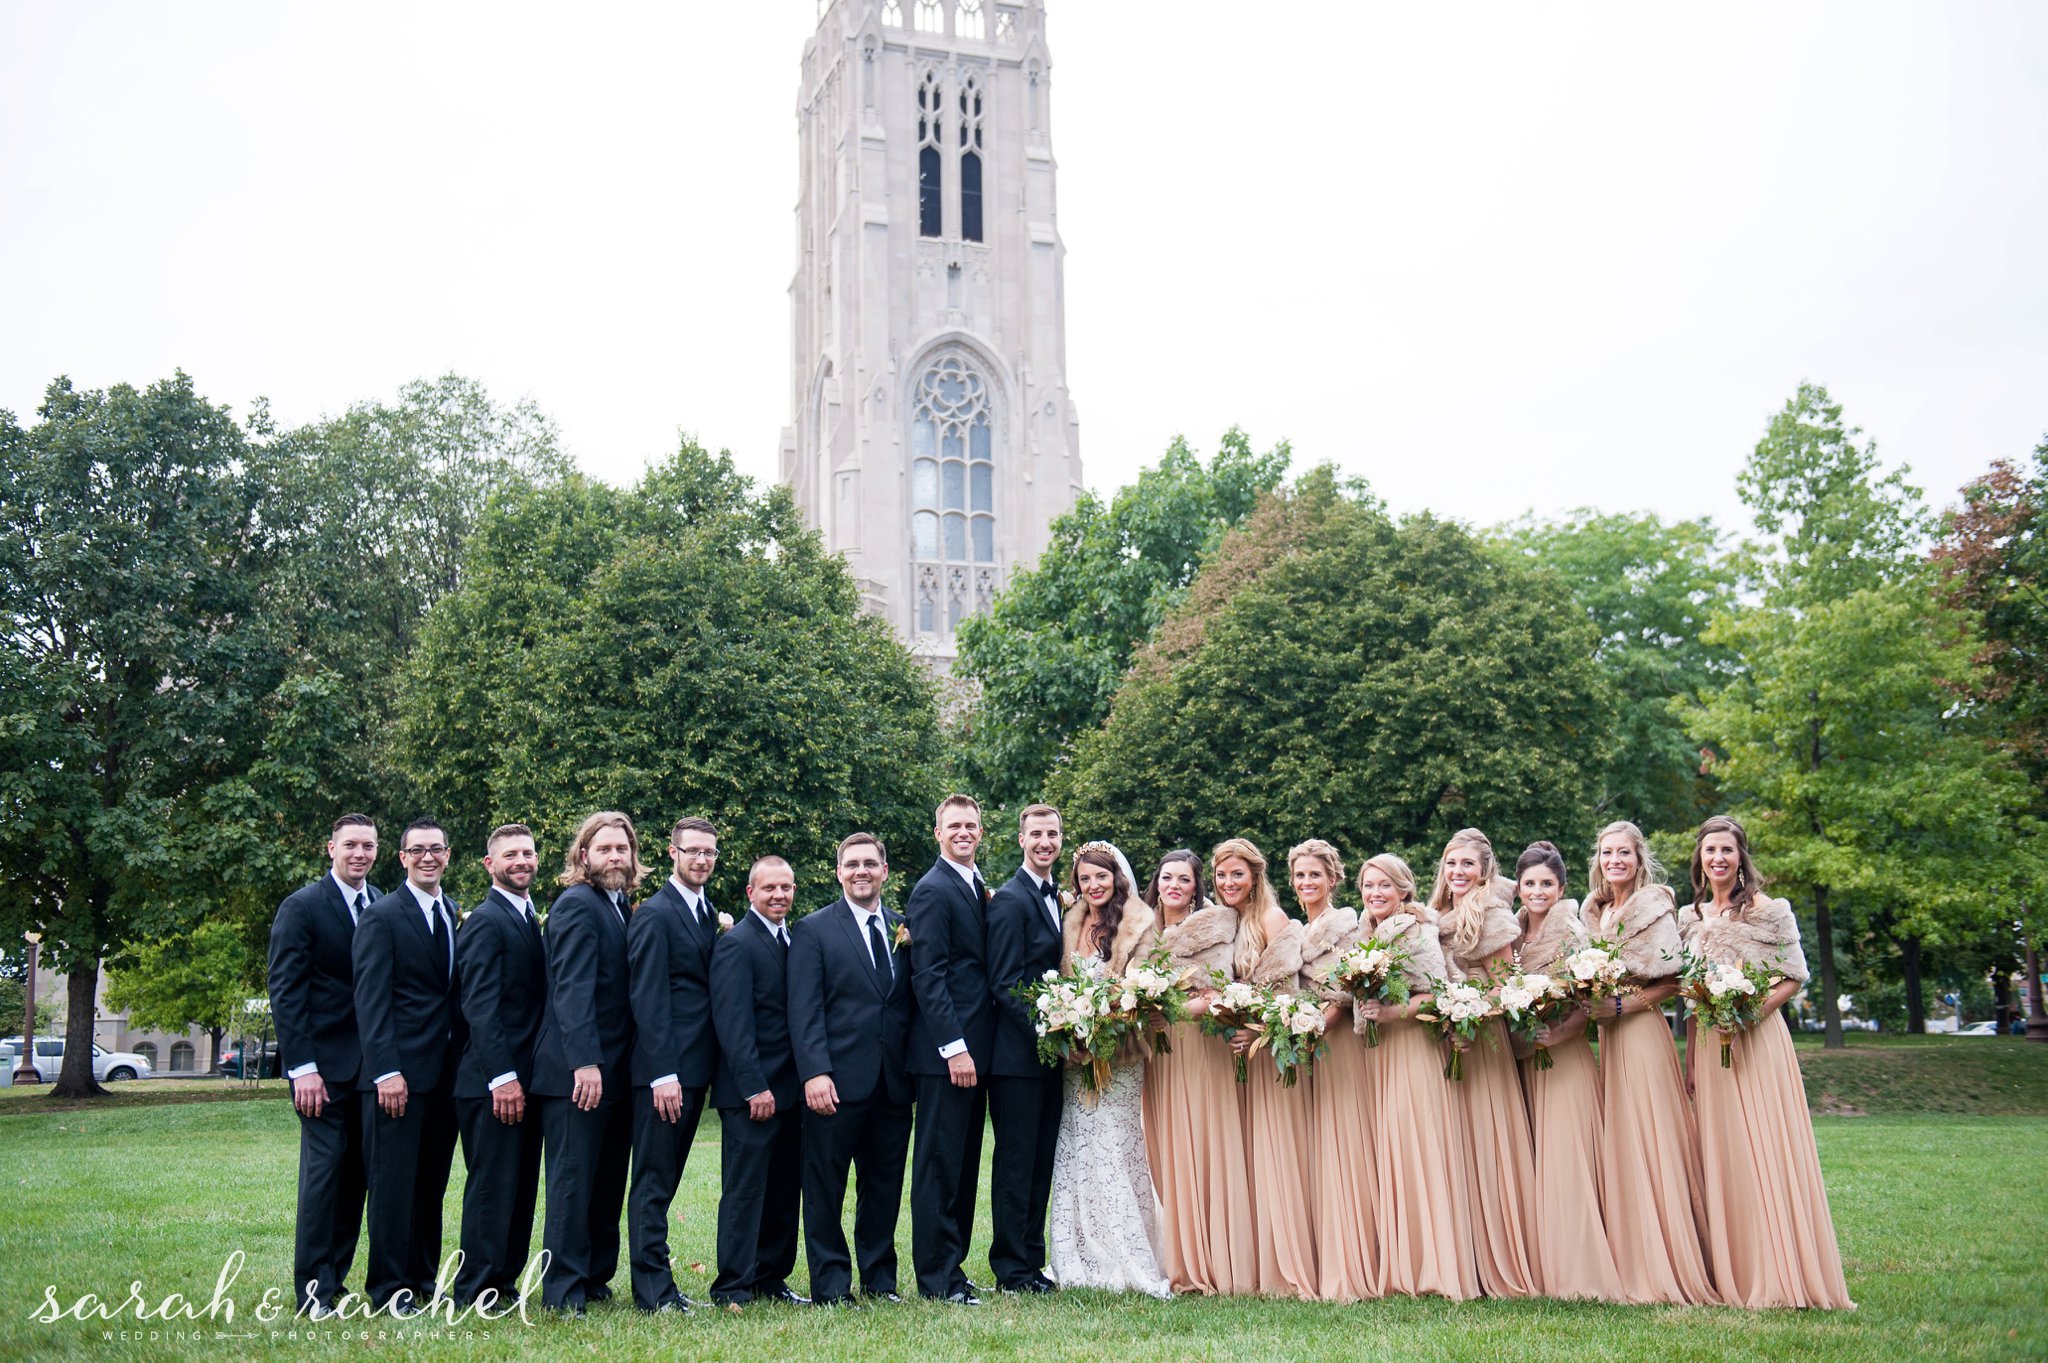 Scottish Rite Cathedral Wedding | Gold Wedding Detaiils | Gold bridesmaids dresses